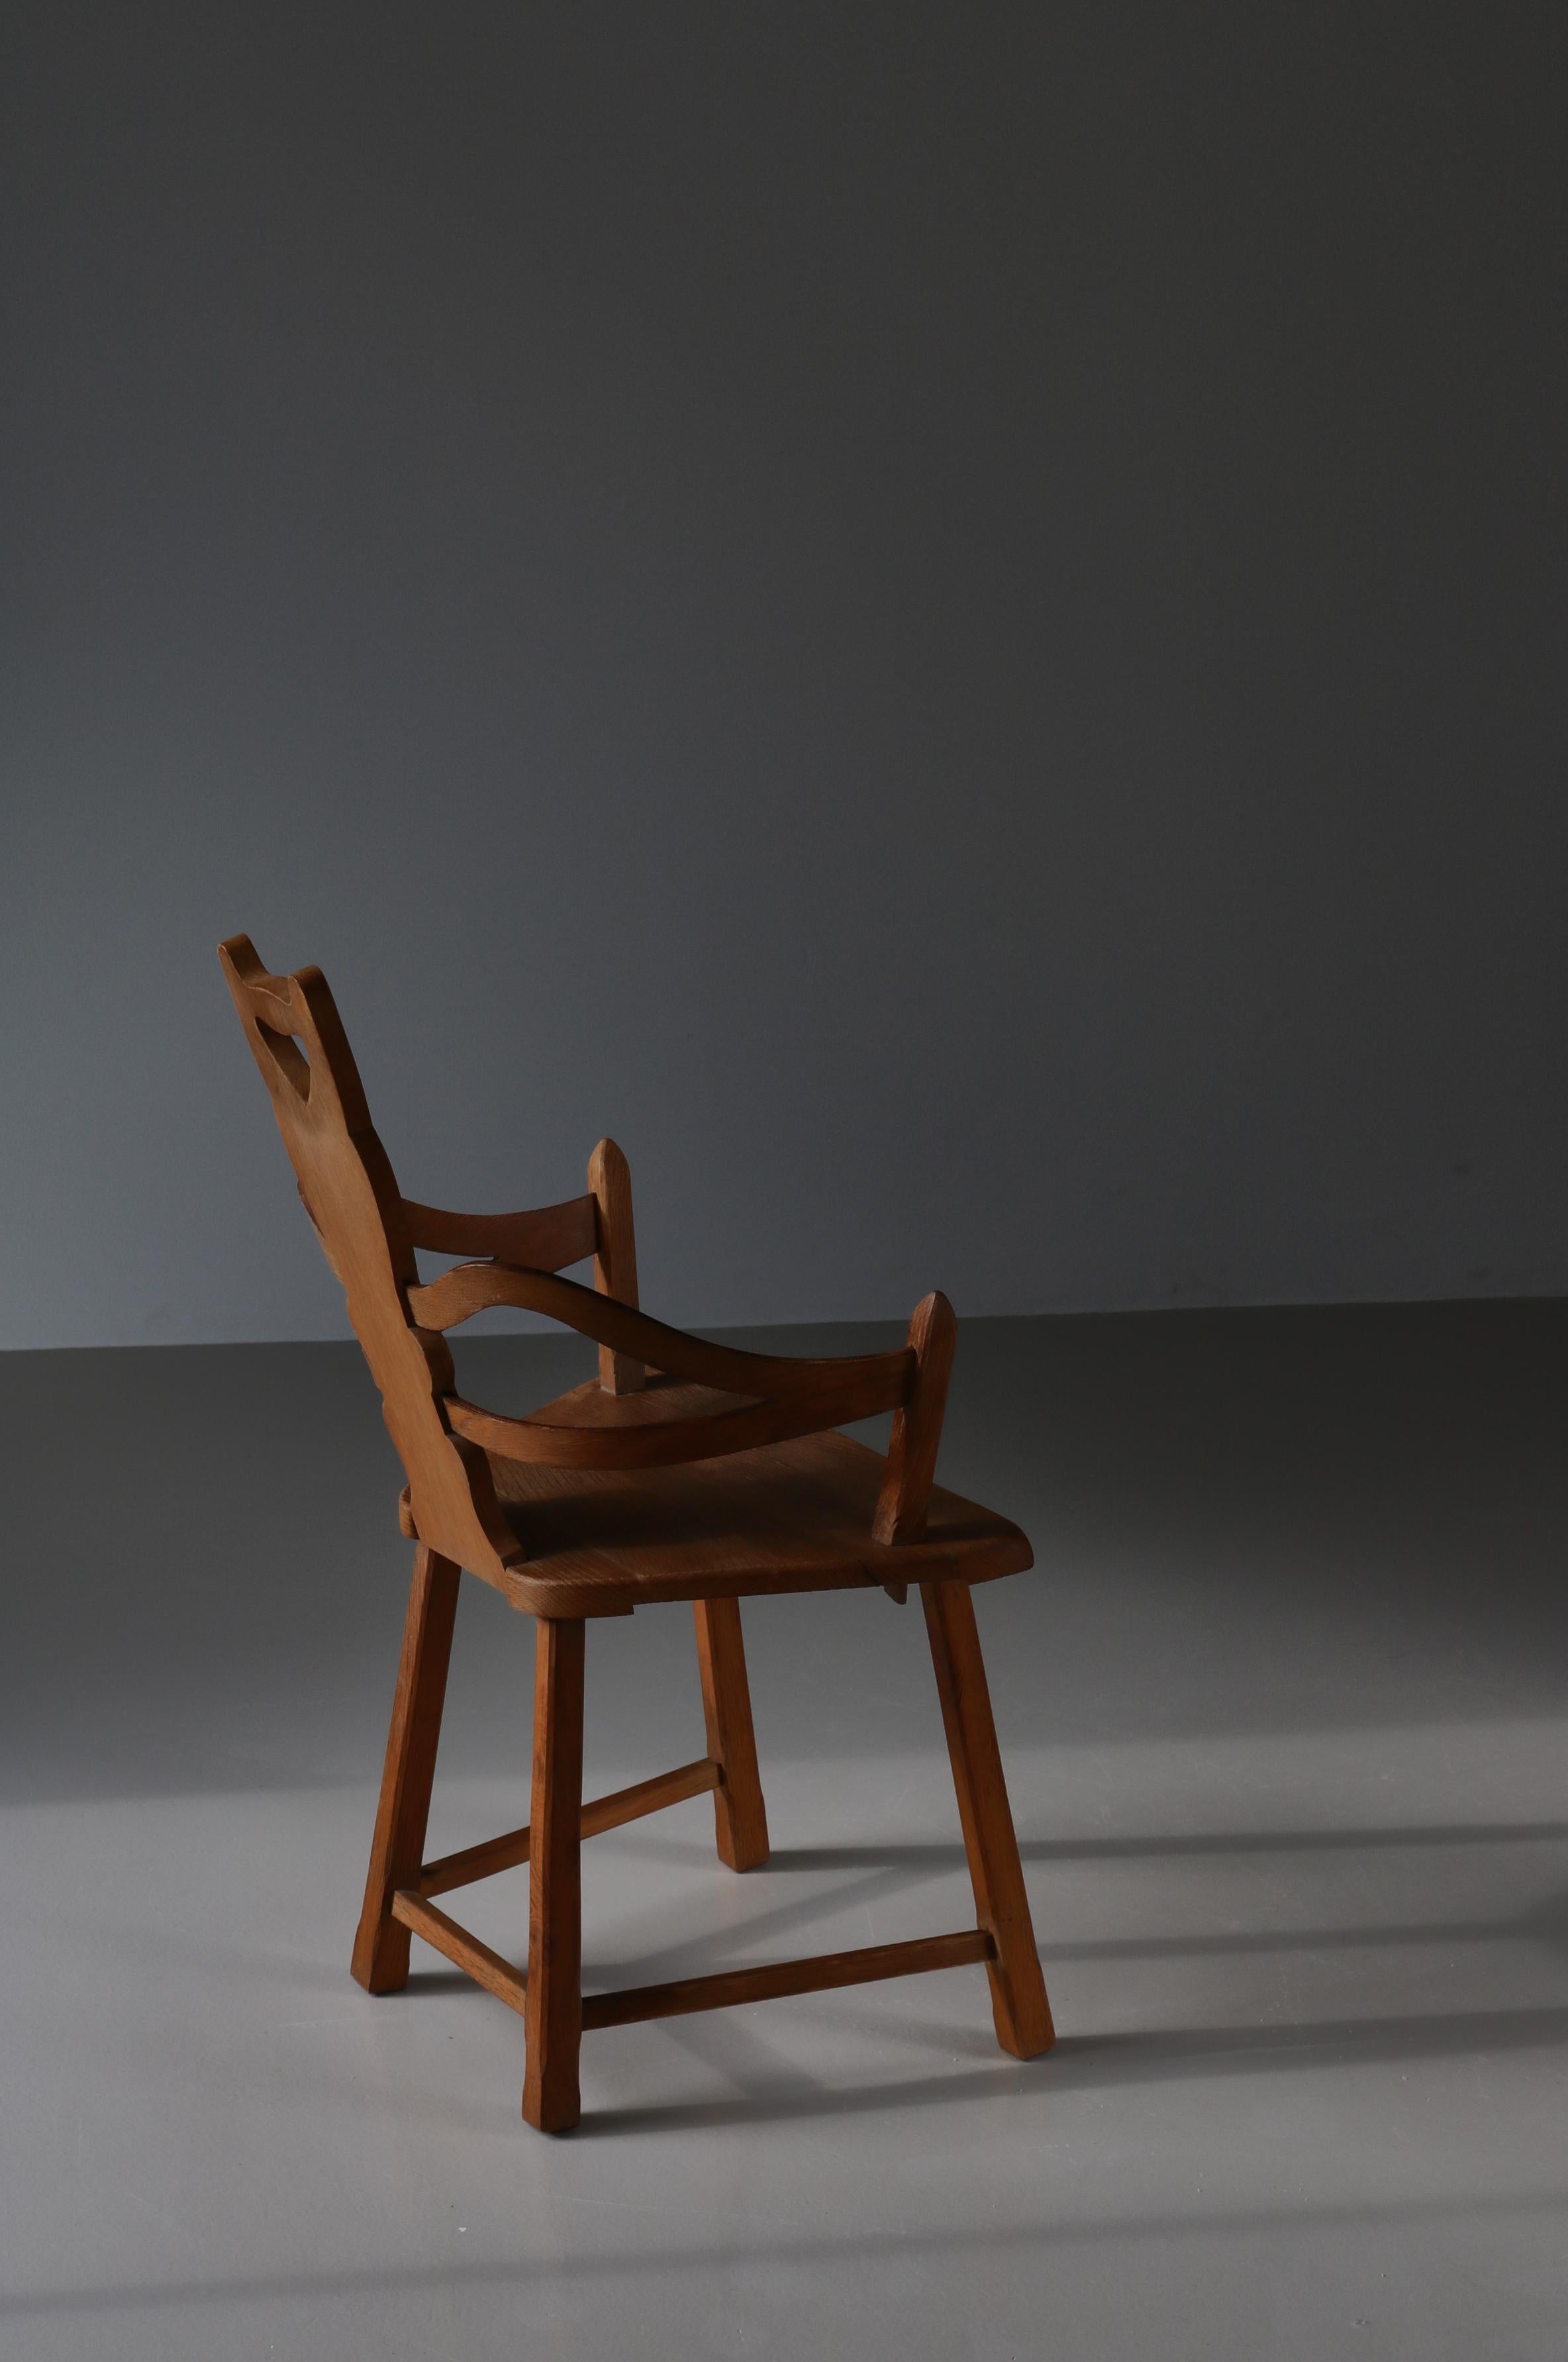 Swedish Folk Art Chair Handmade in Oakwood, 1900s For Sale 9